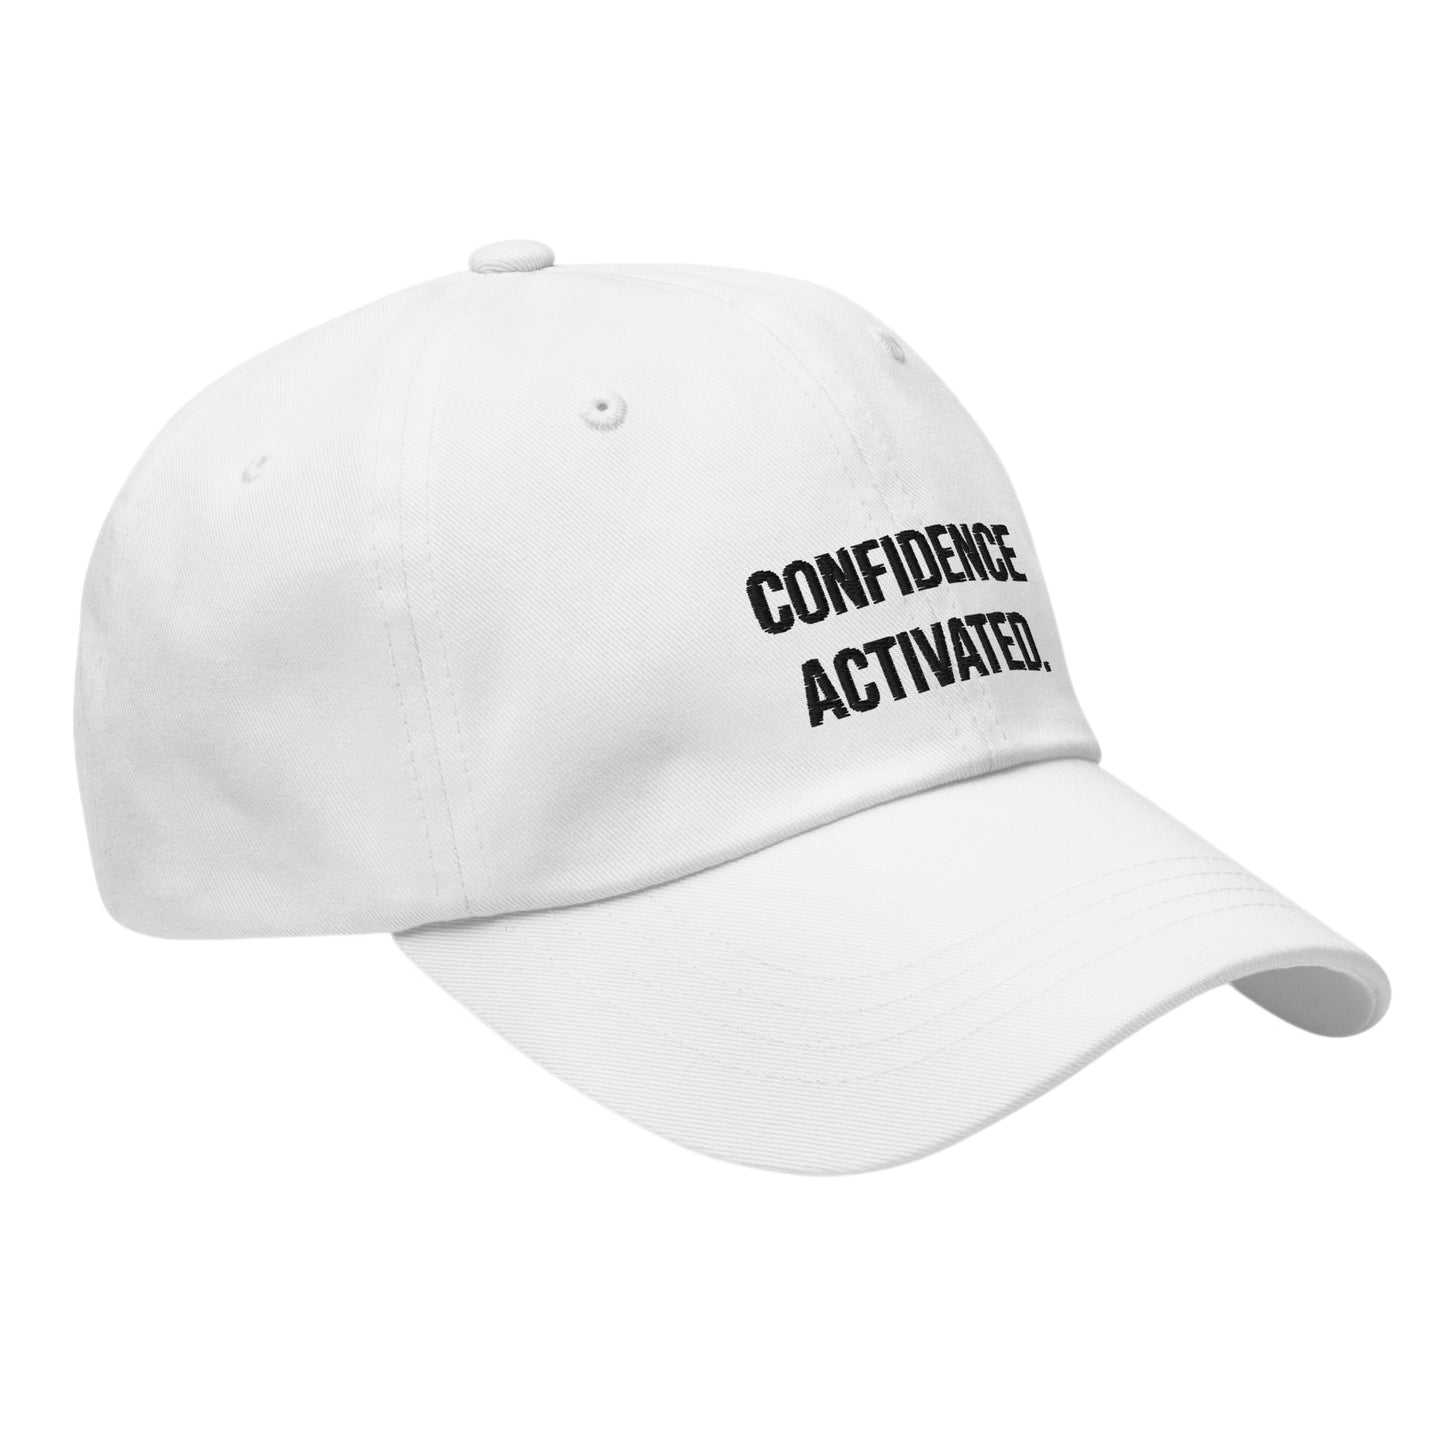 POTSH's "CONFIDENCE ACTIVATED" Classic White Hat